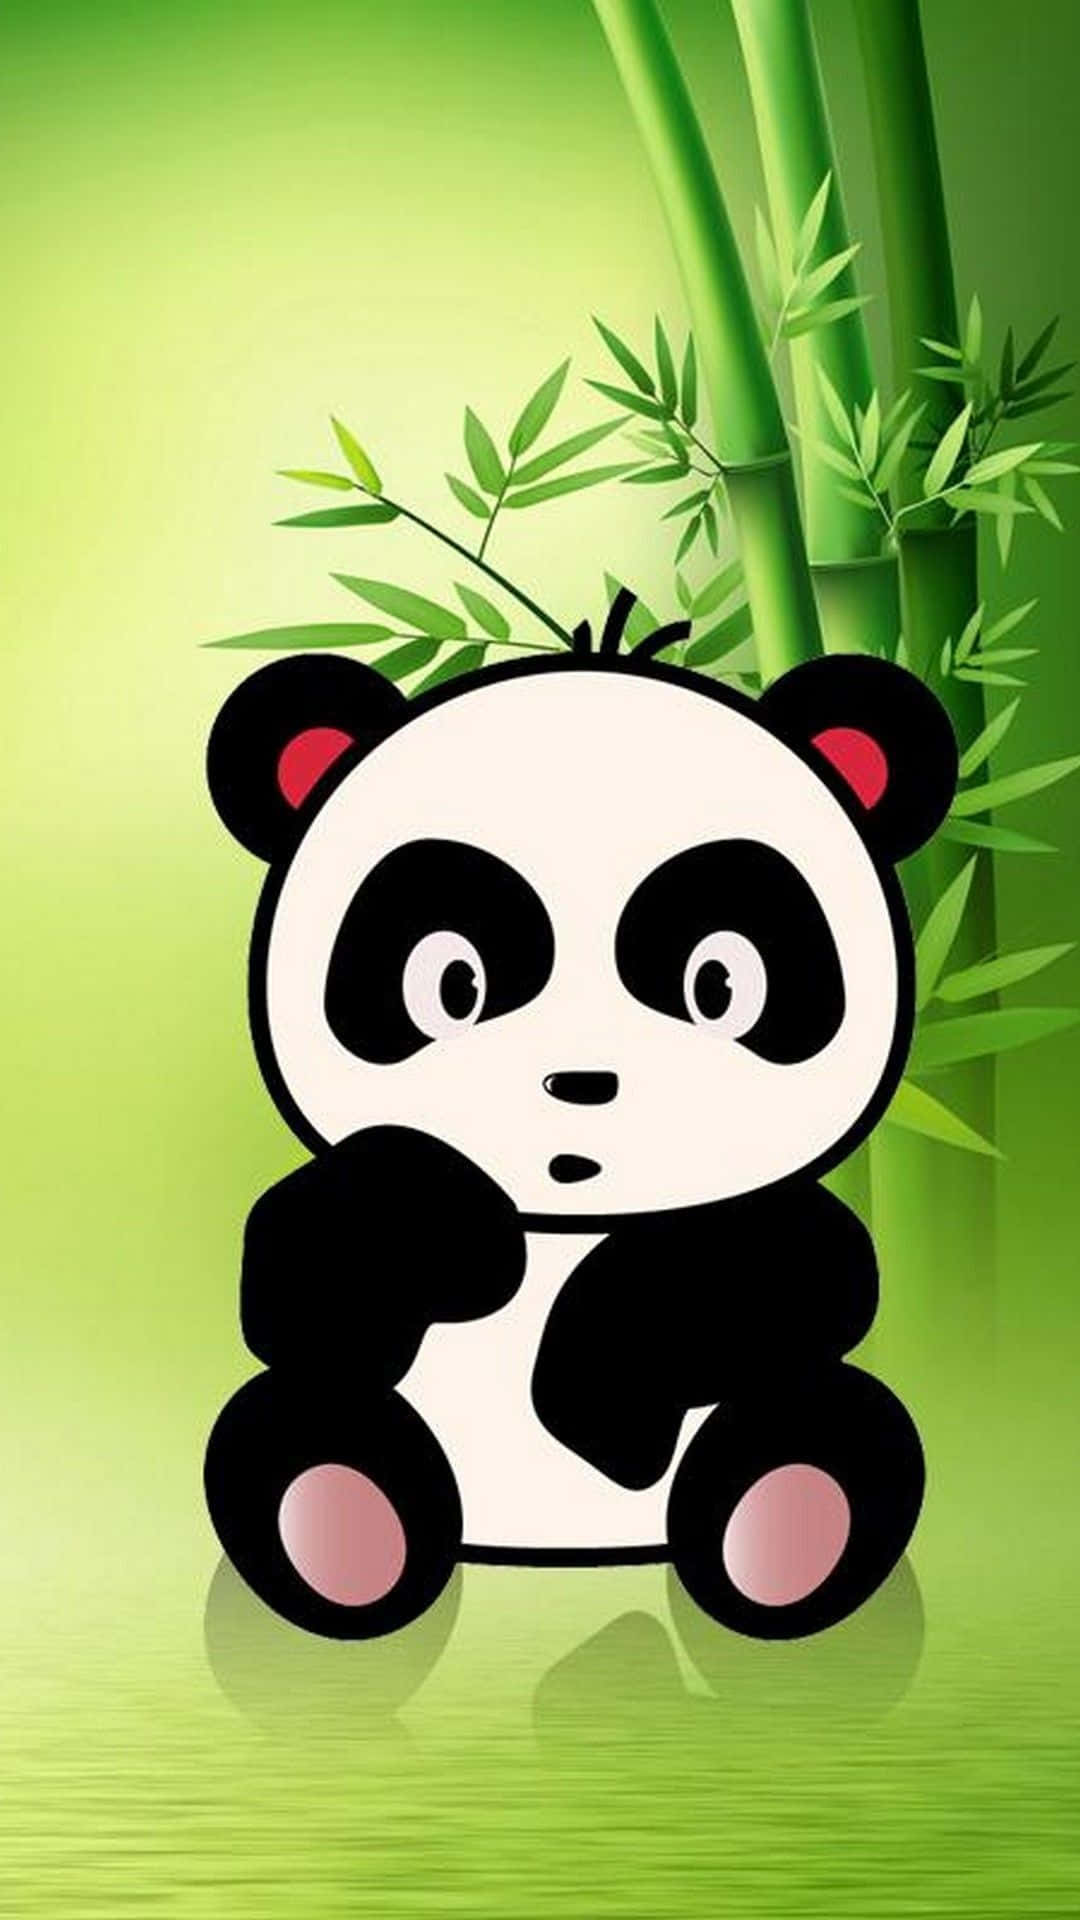 Cute Cartoon Panda With Bamboo Background